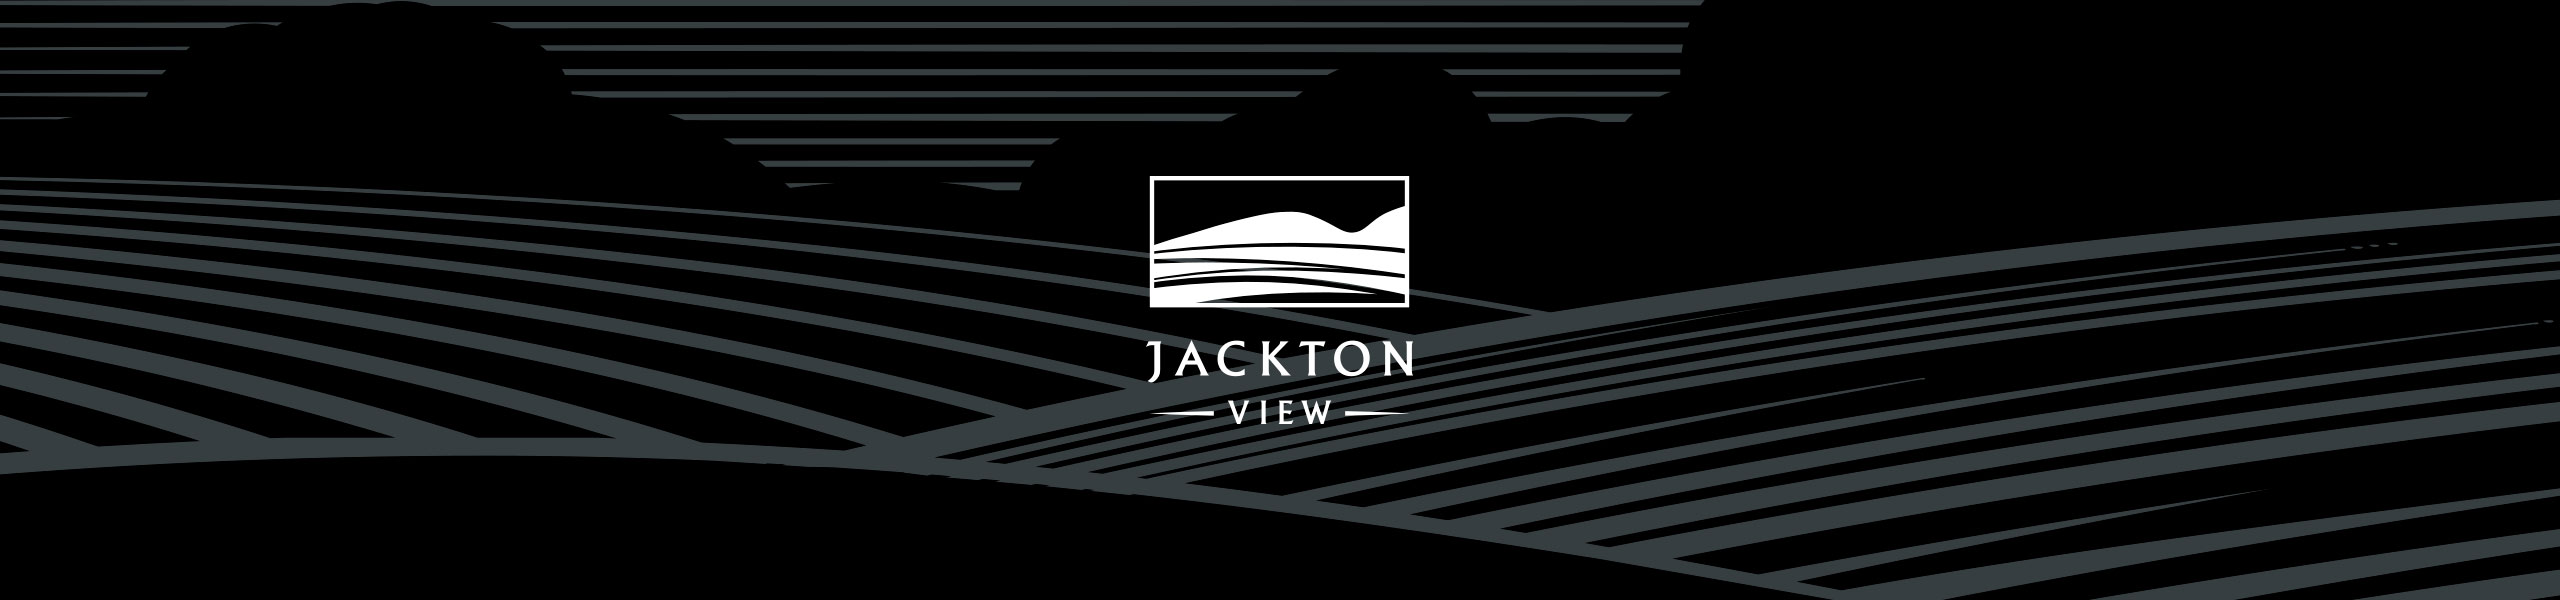 Jackton view logo